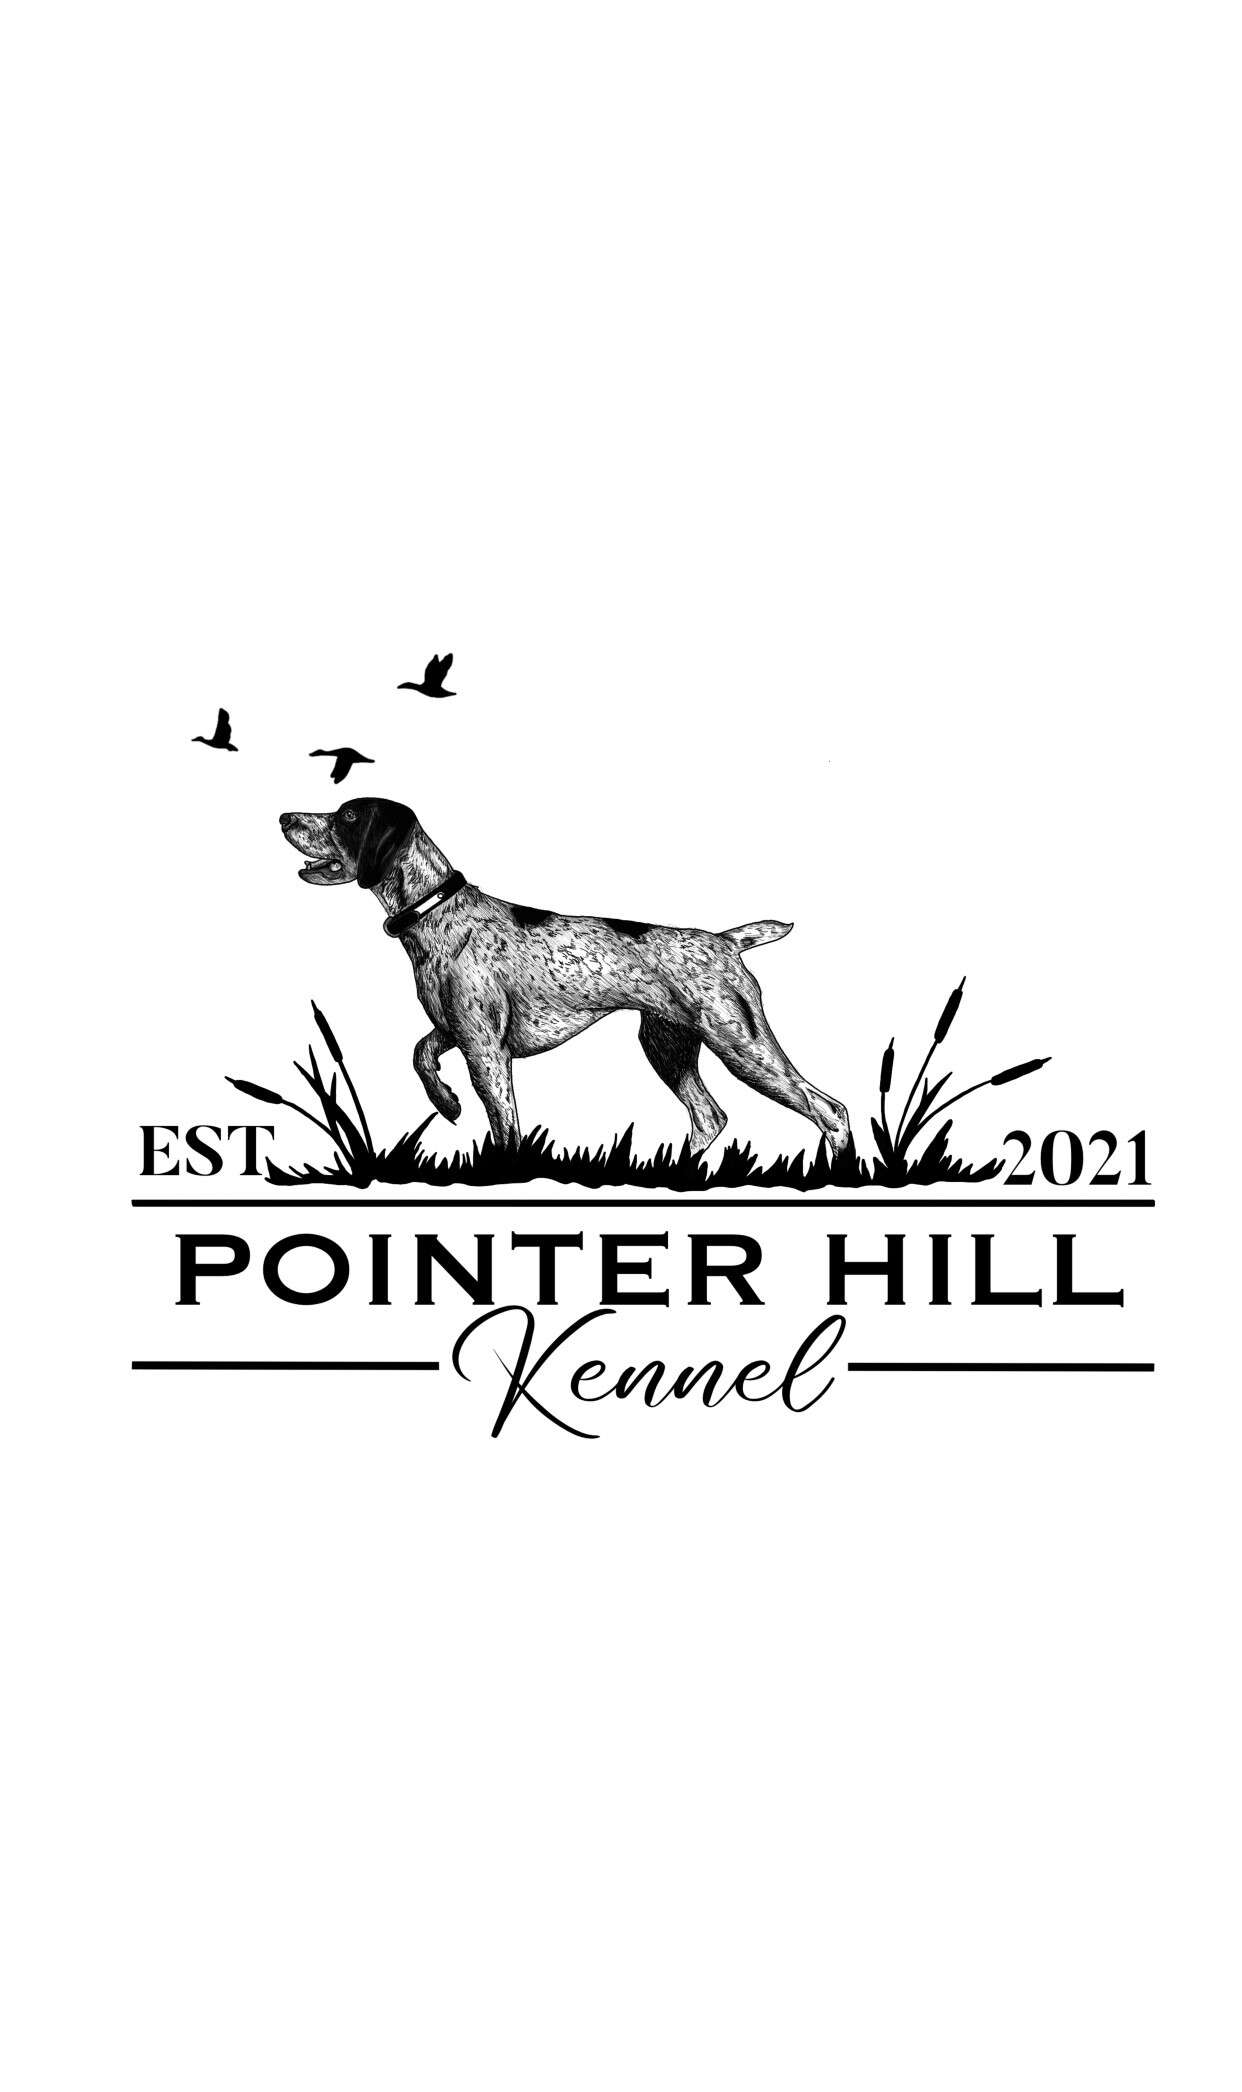 Pointer Hill Kennel